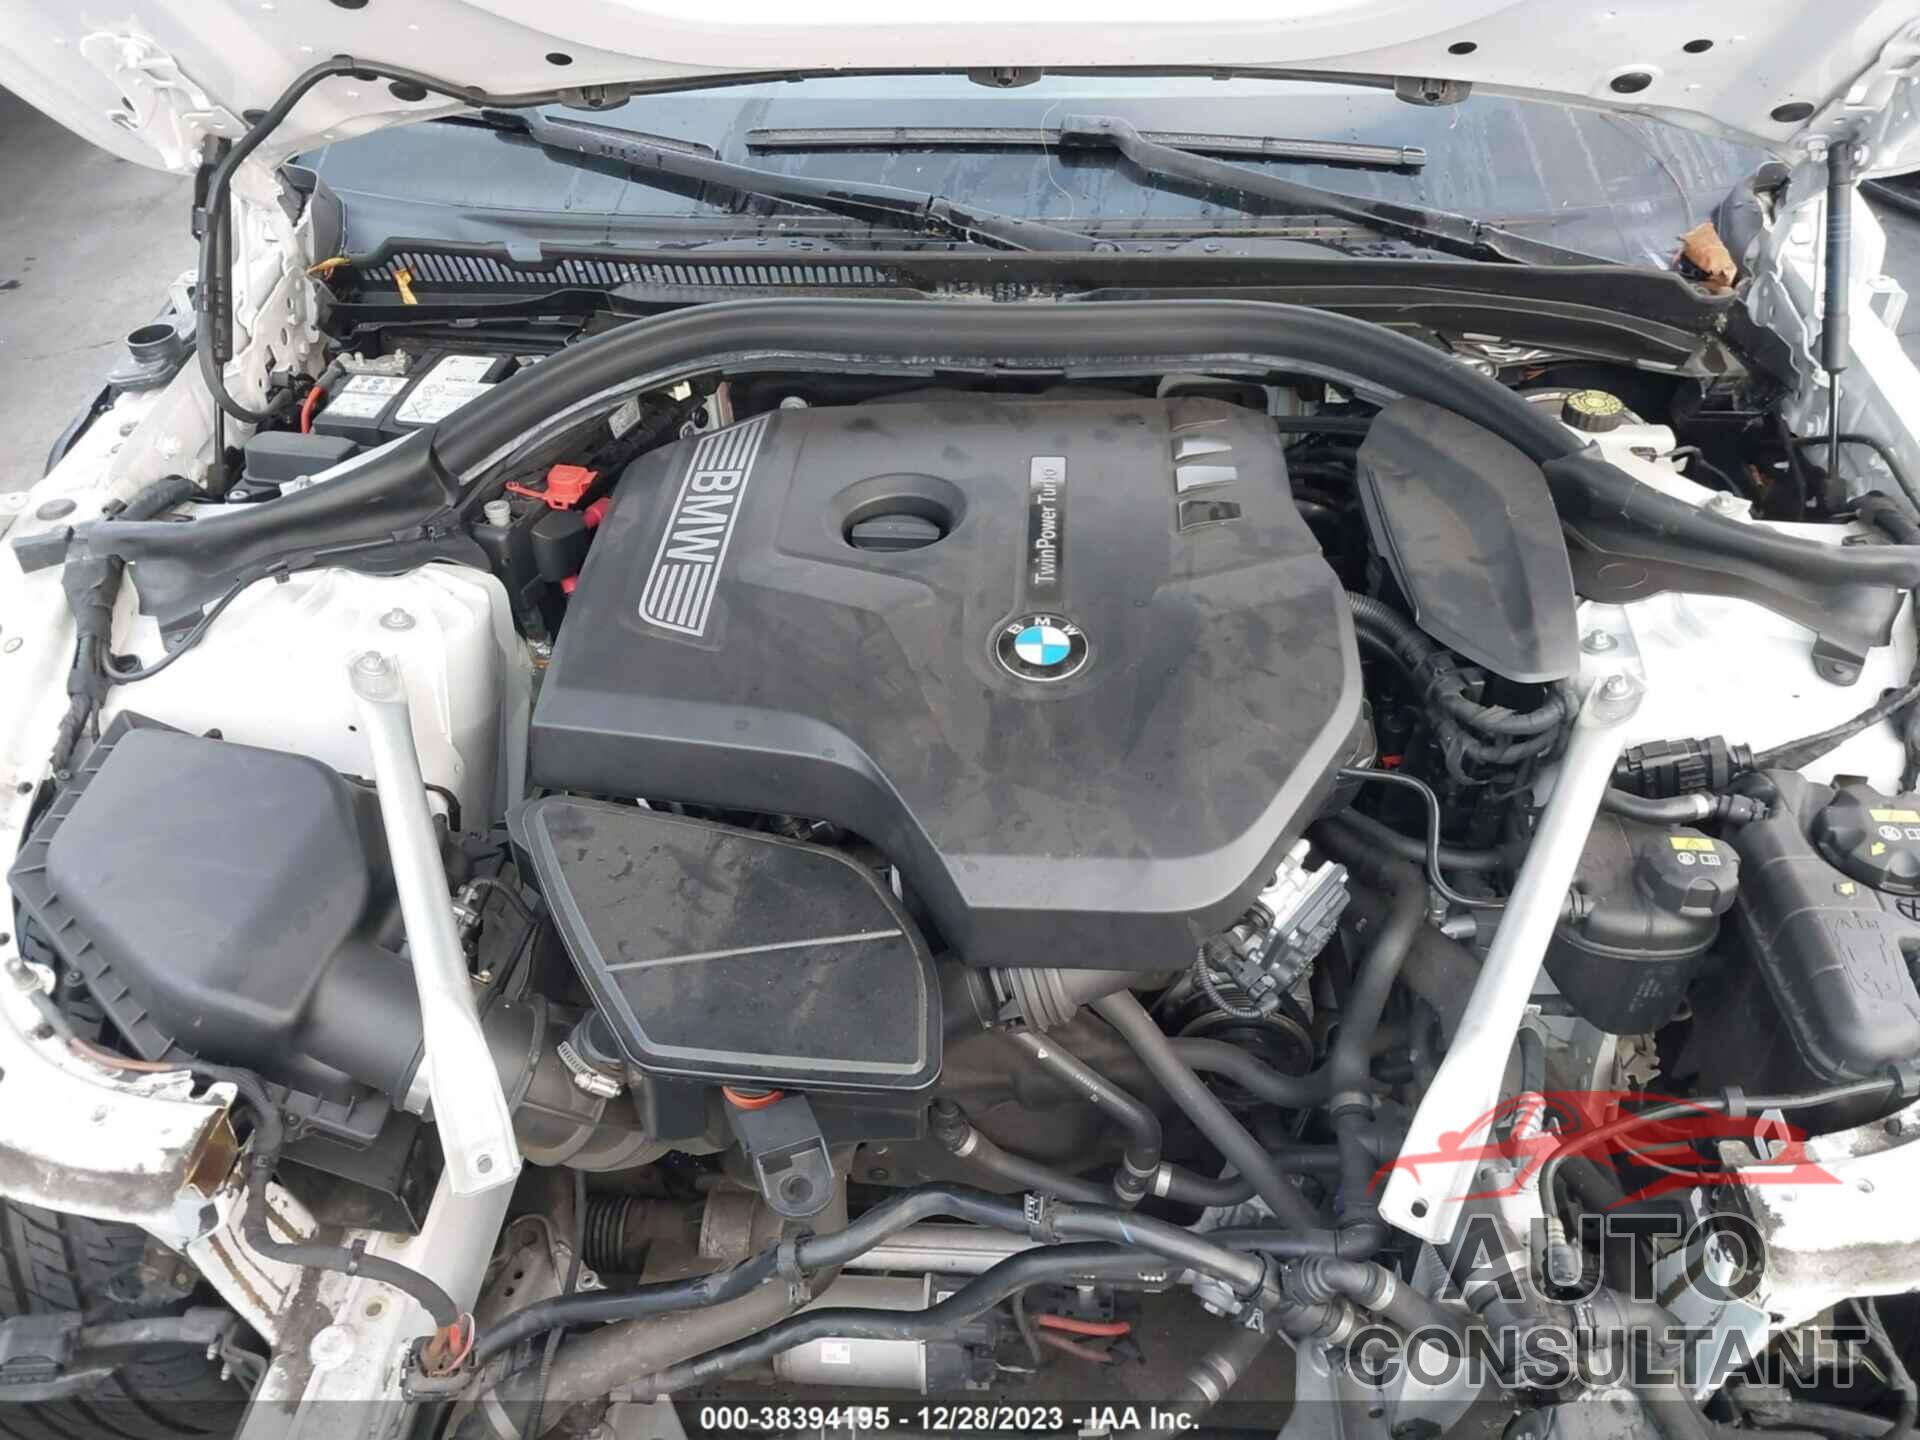 BMW 530I 2018 - WBAJA5C54JG900153